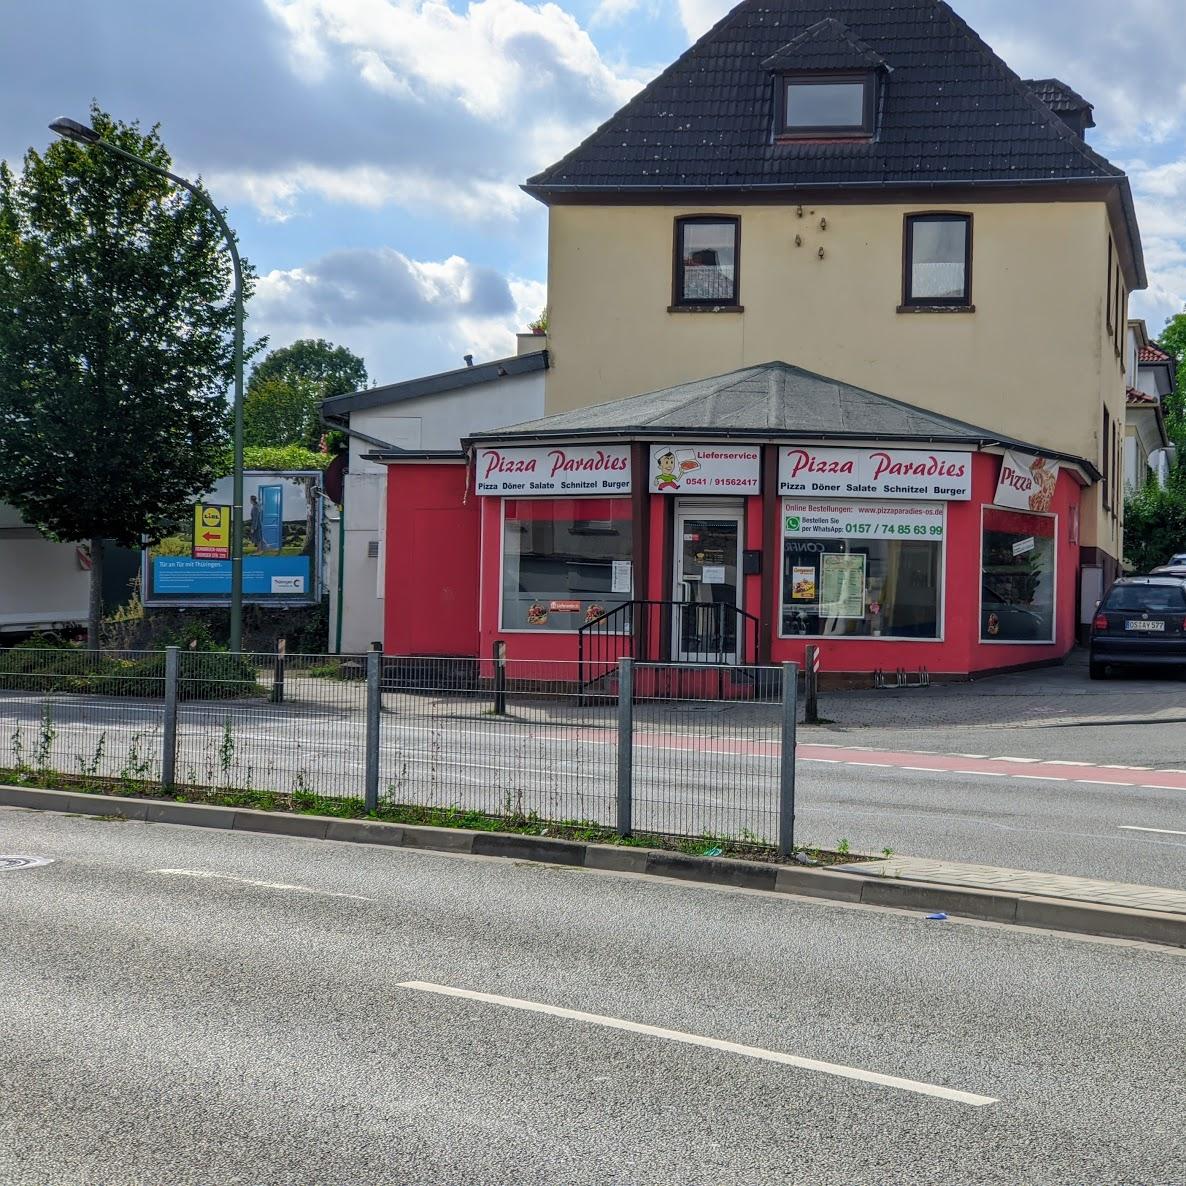 Restaurant "Pizza Paradies" in Osnabrück